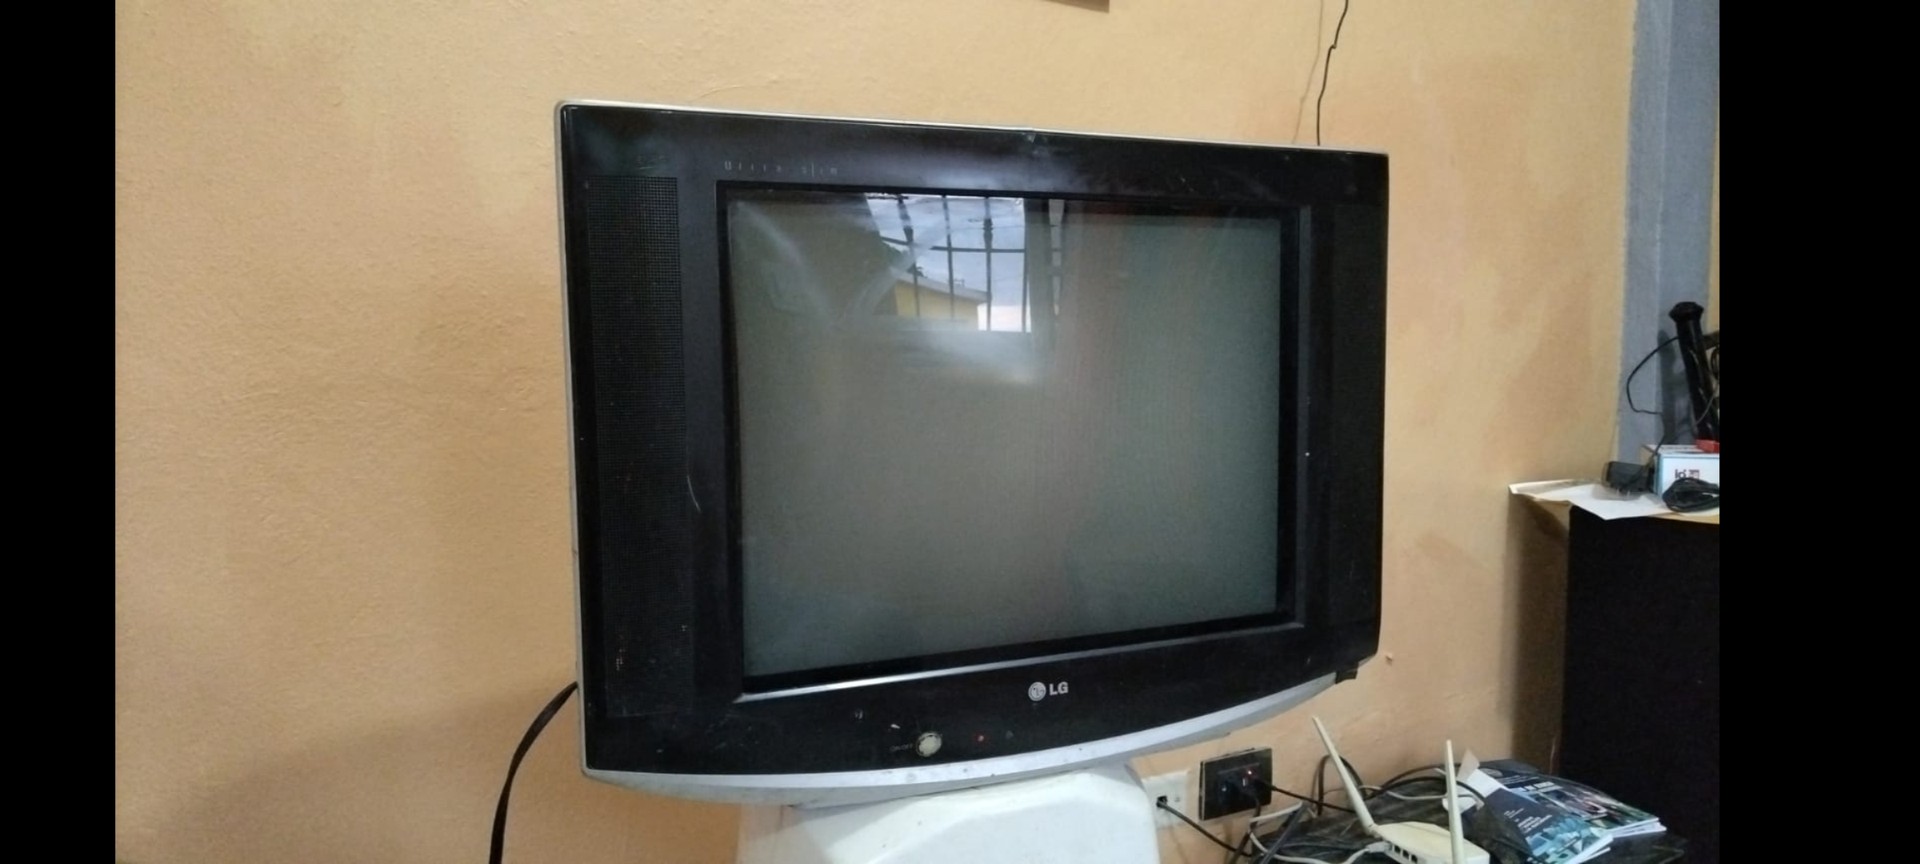 tv - Televisor clásico marca LG